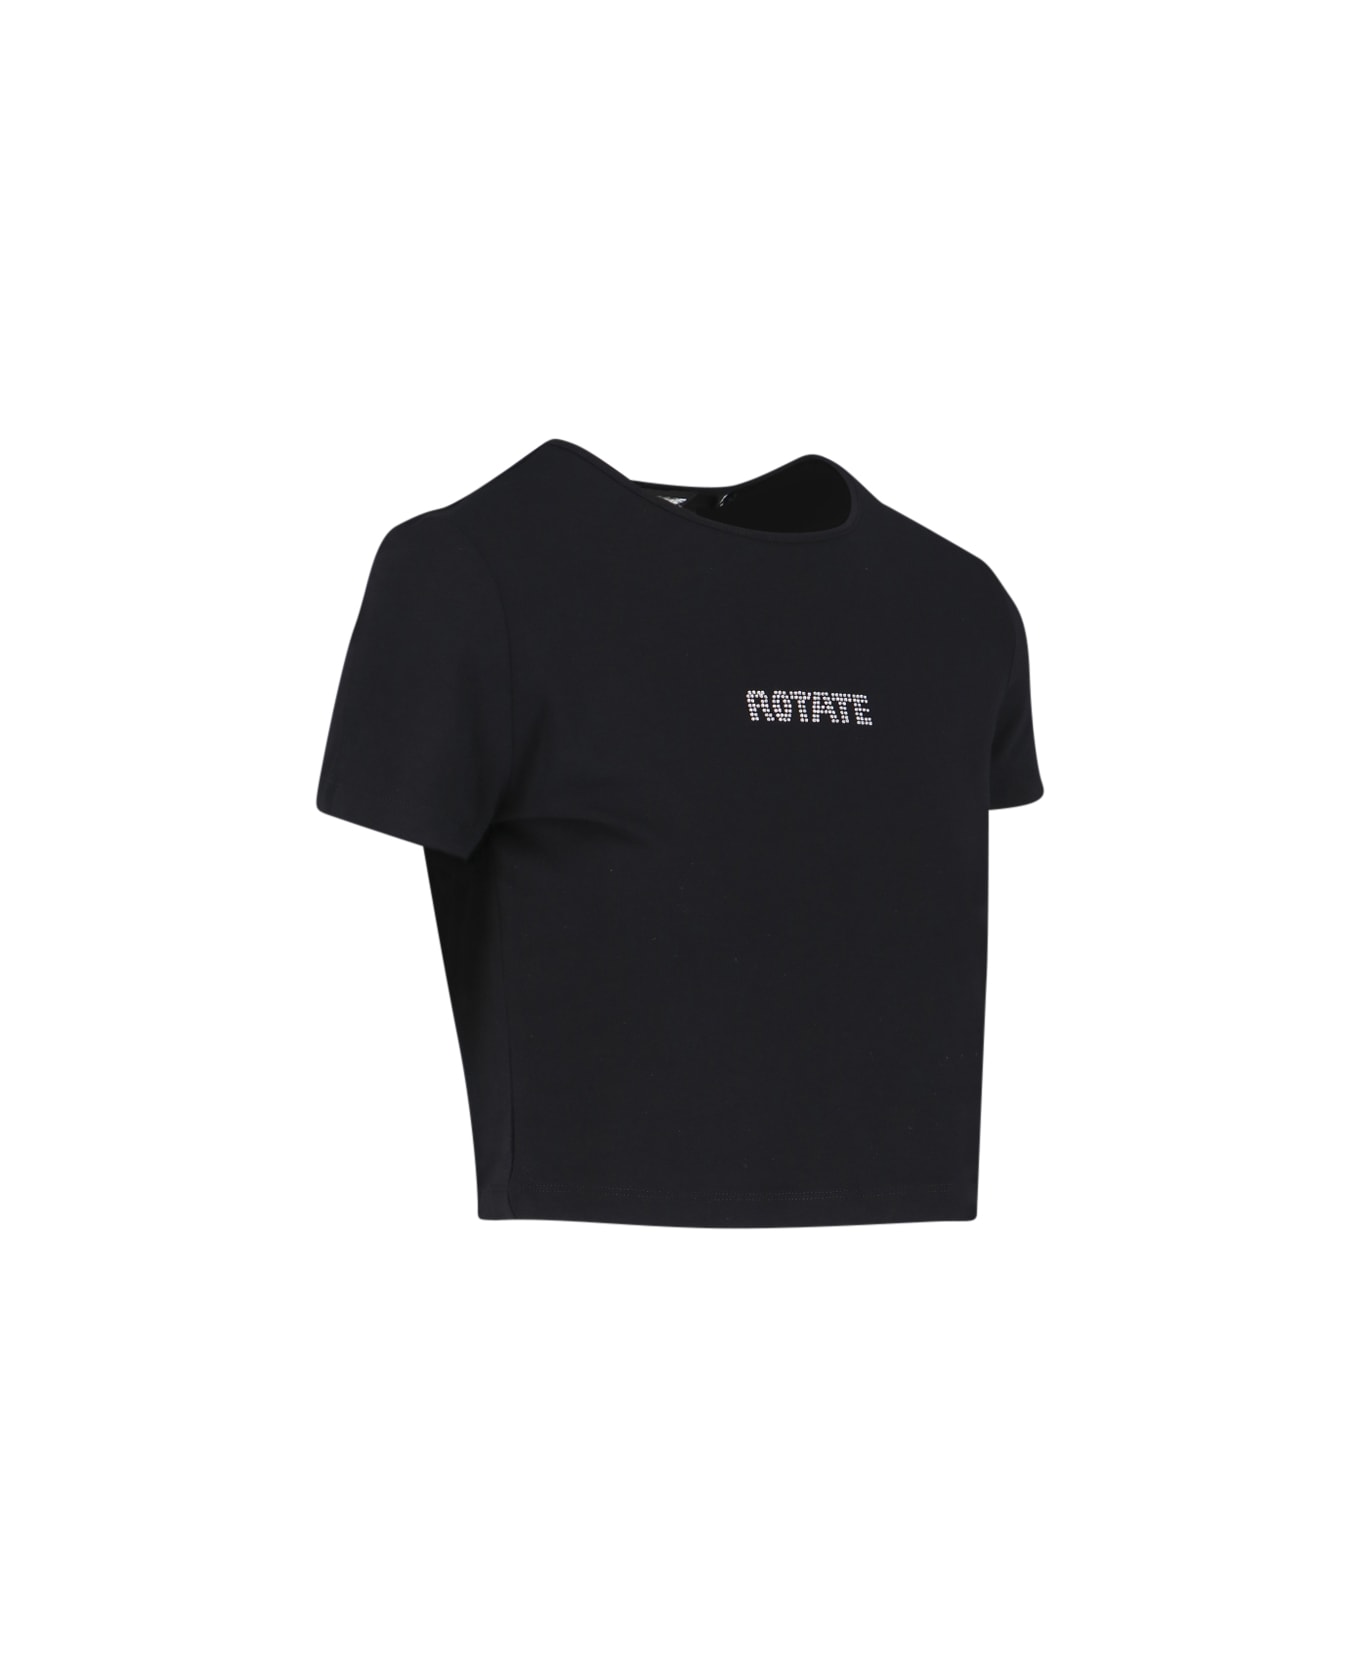 Rotate by Birger Christensen Logo Crop T-shirt - Black  